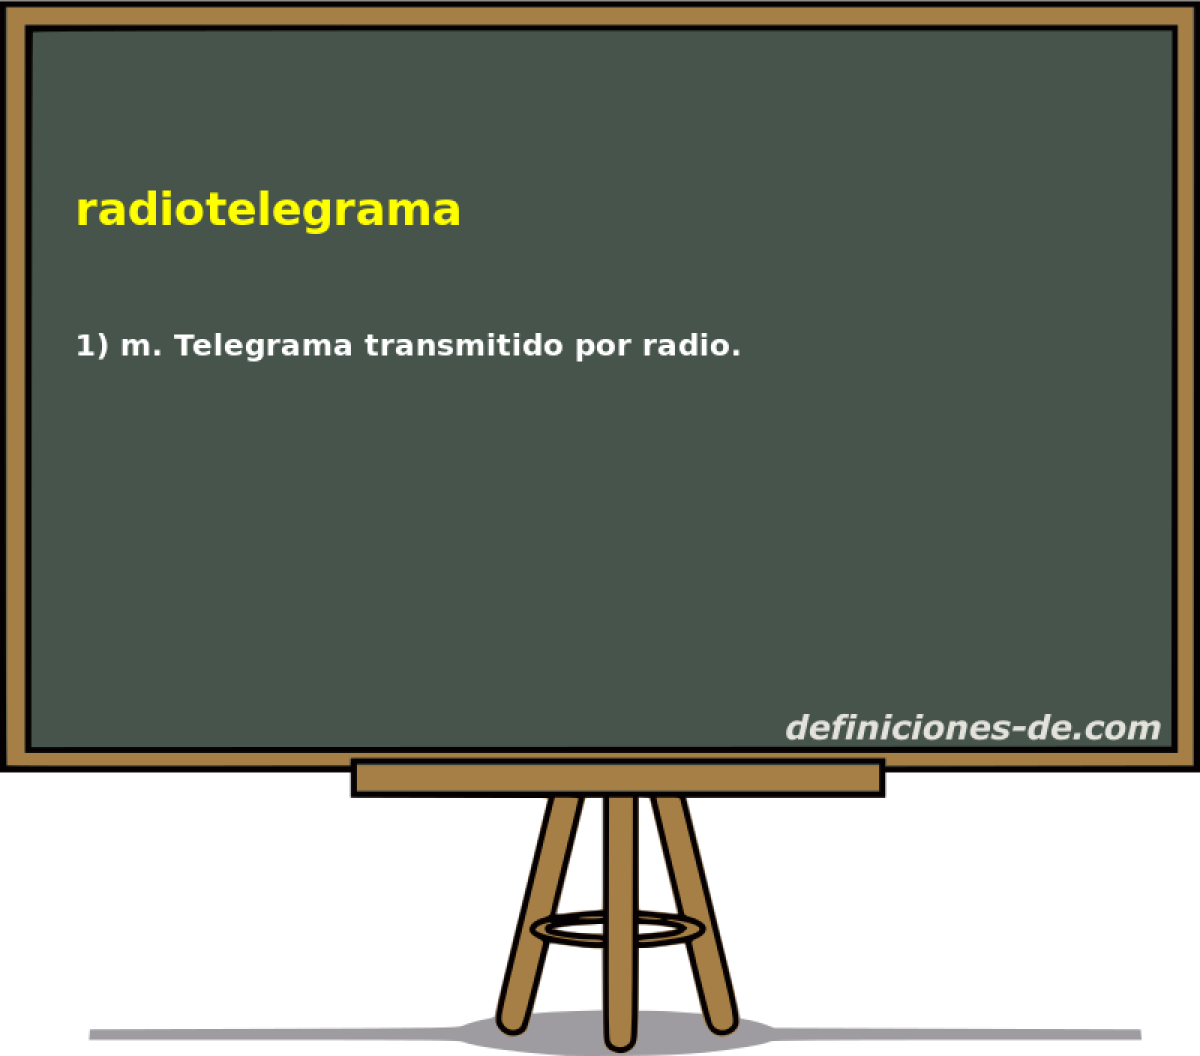 radiotelegrama 